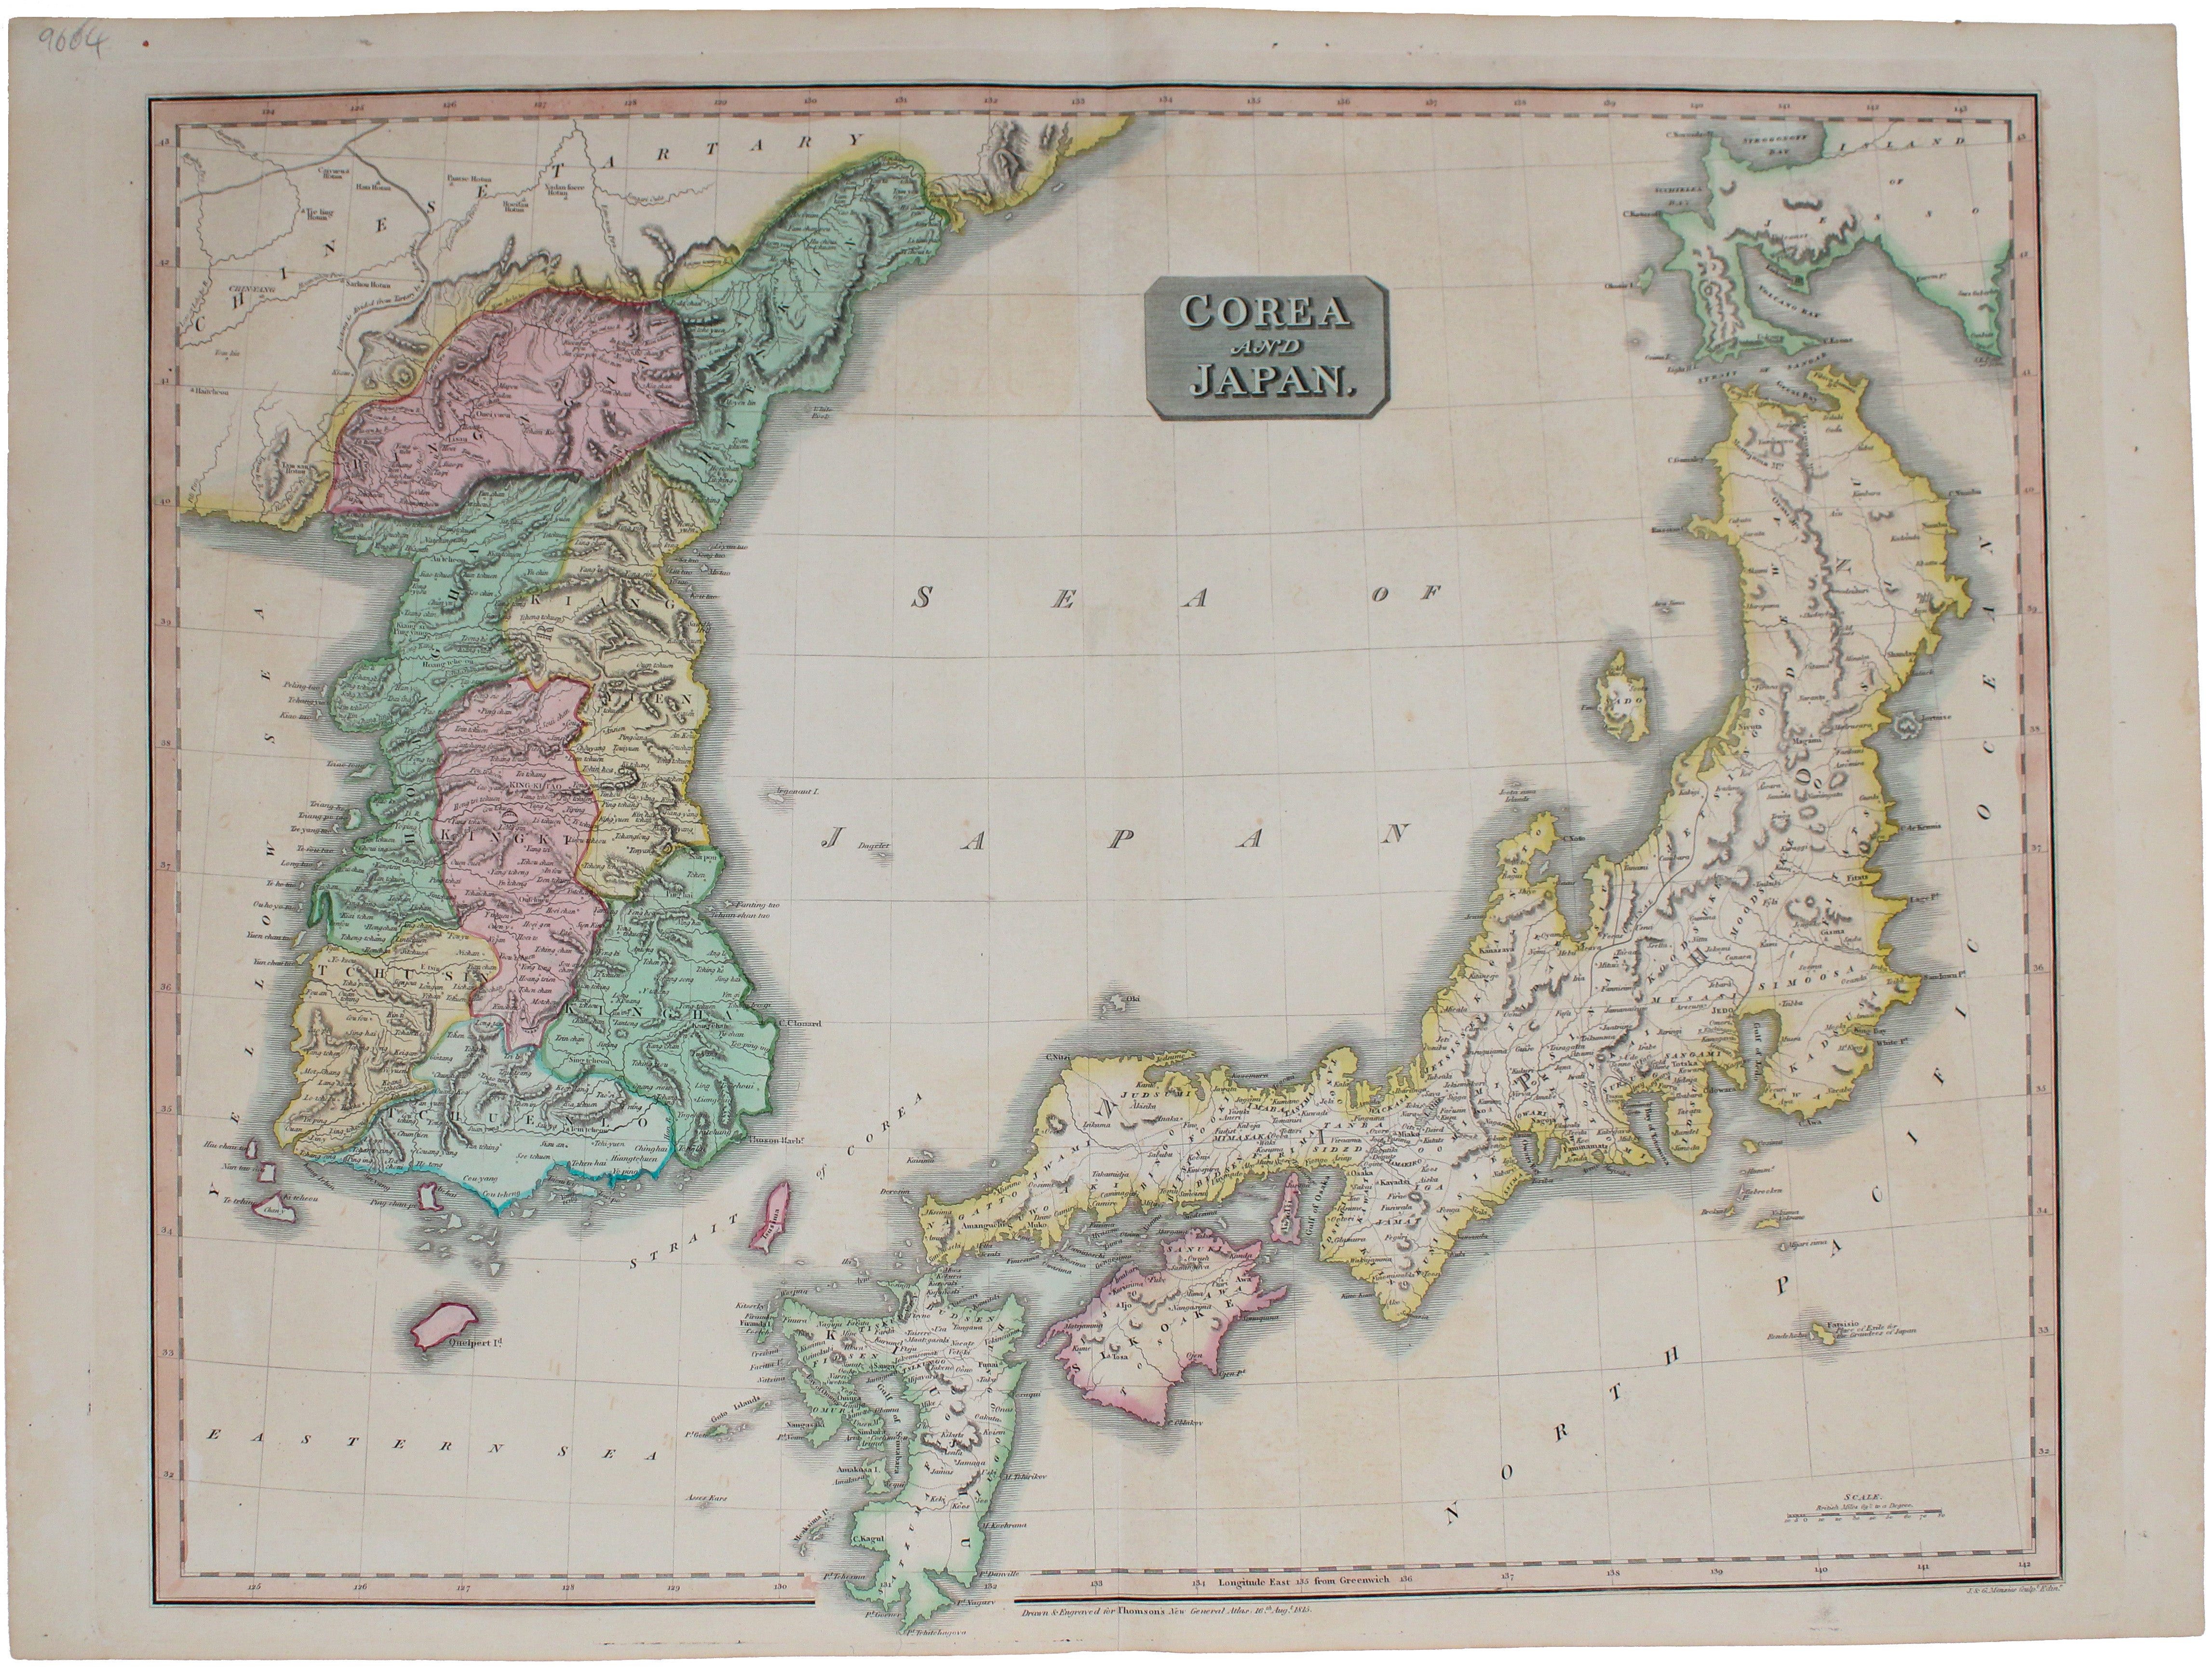 Thomson's Map of Korea & Japan